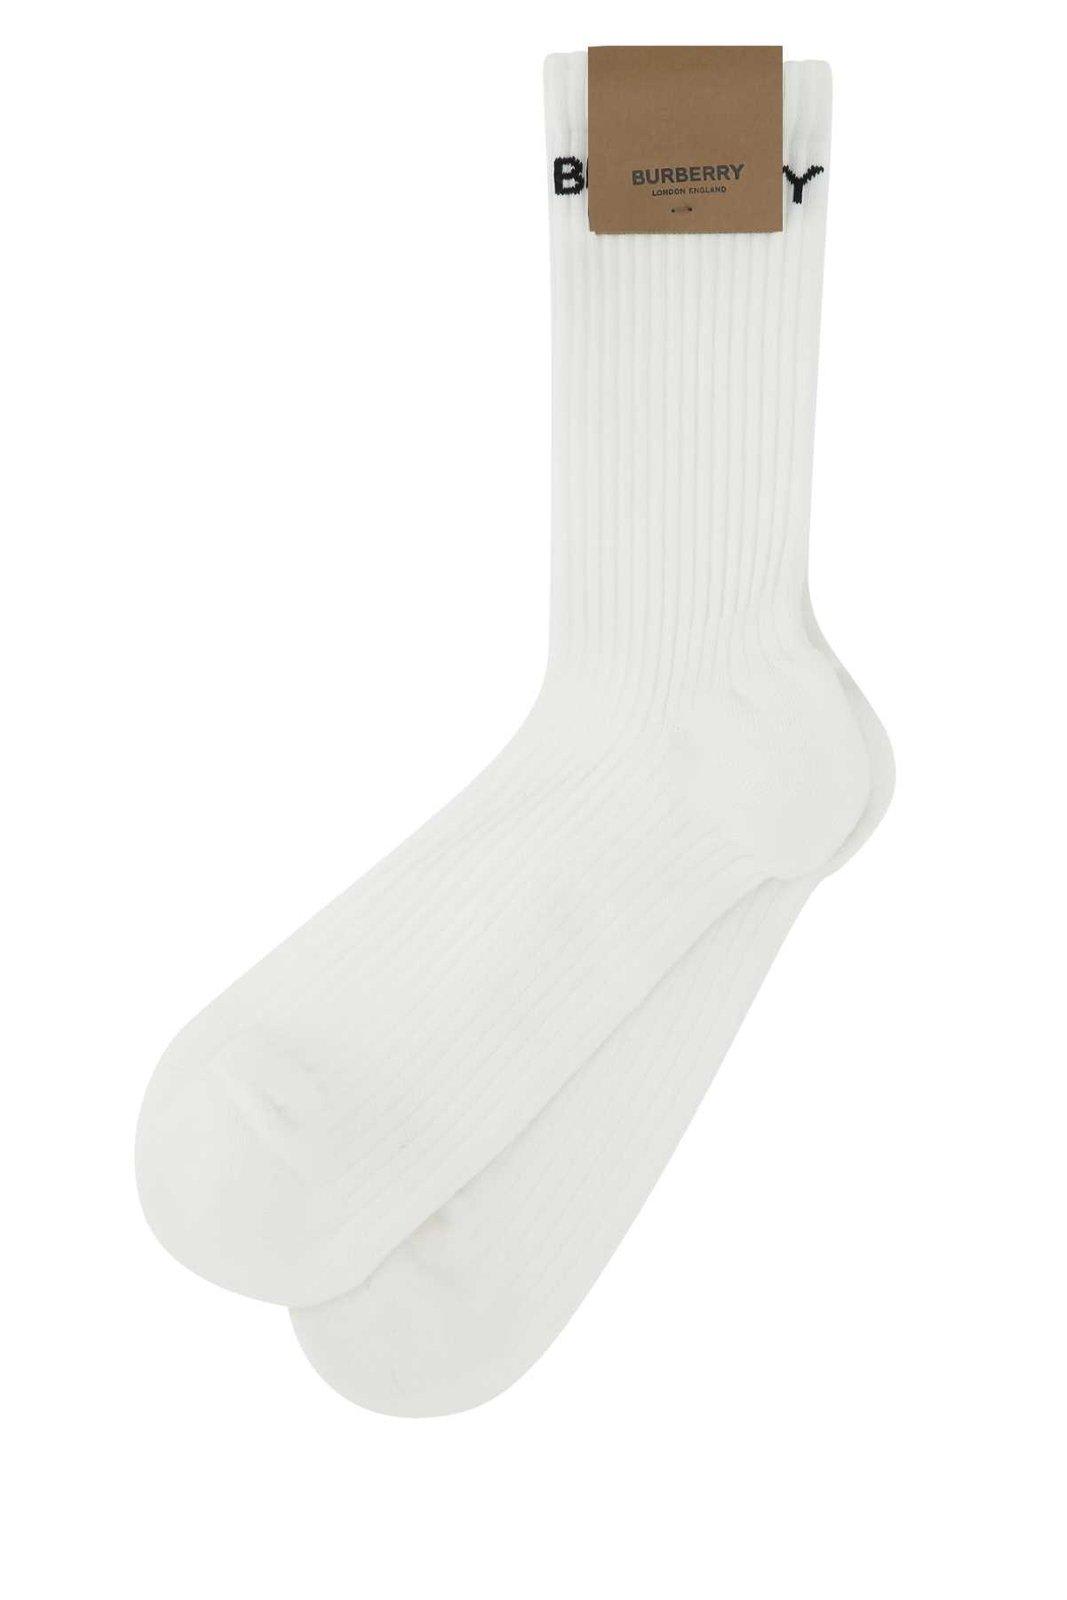 Men's BURBERRY Socks Sale, Up To 70% Off | ModeSens